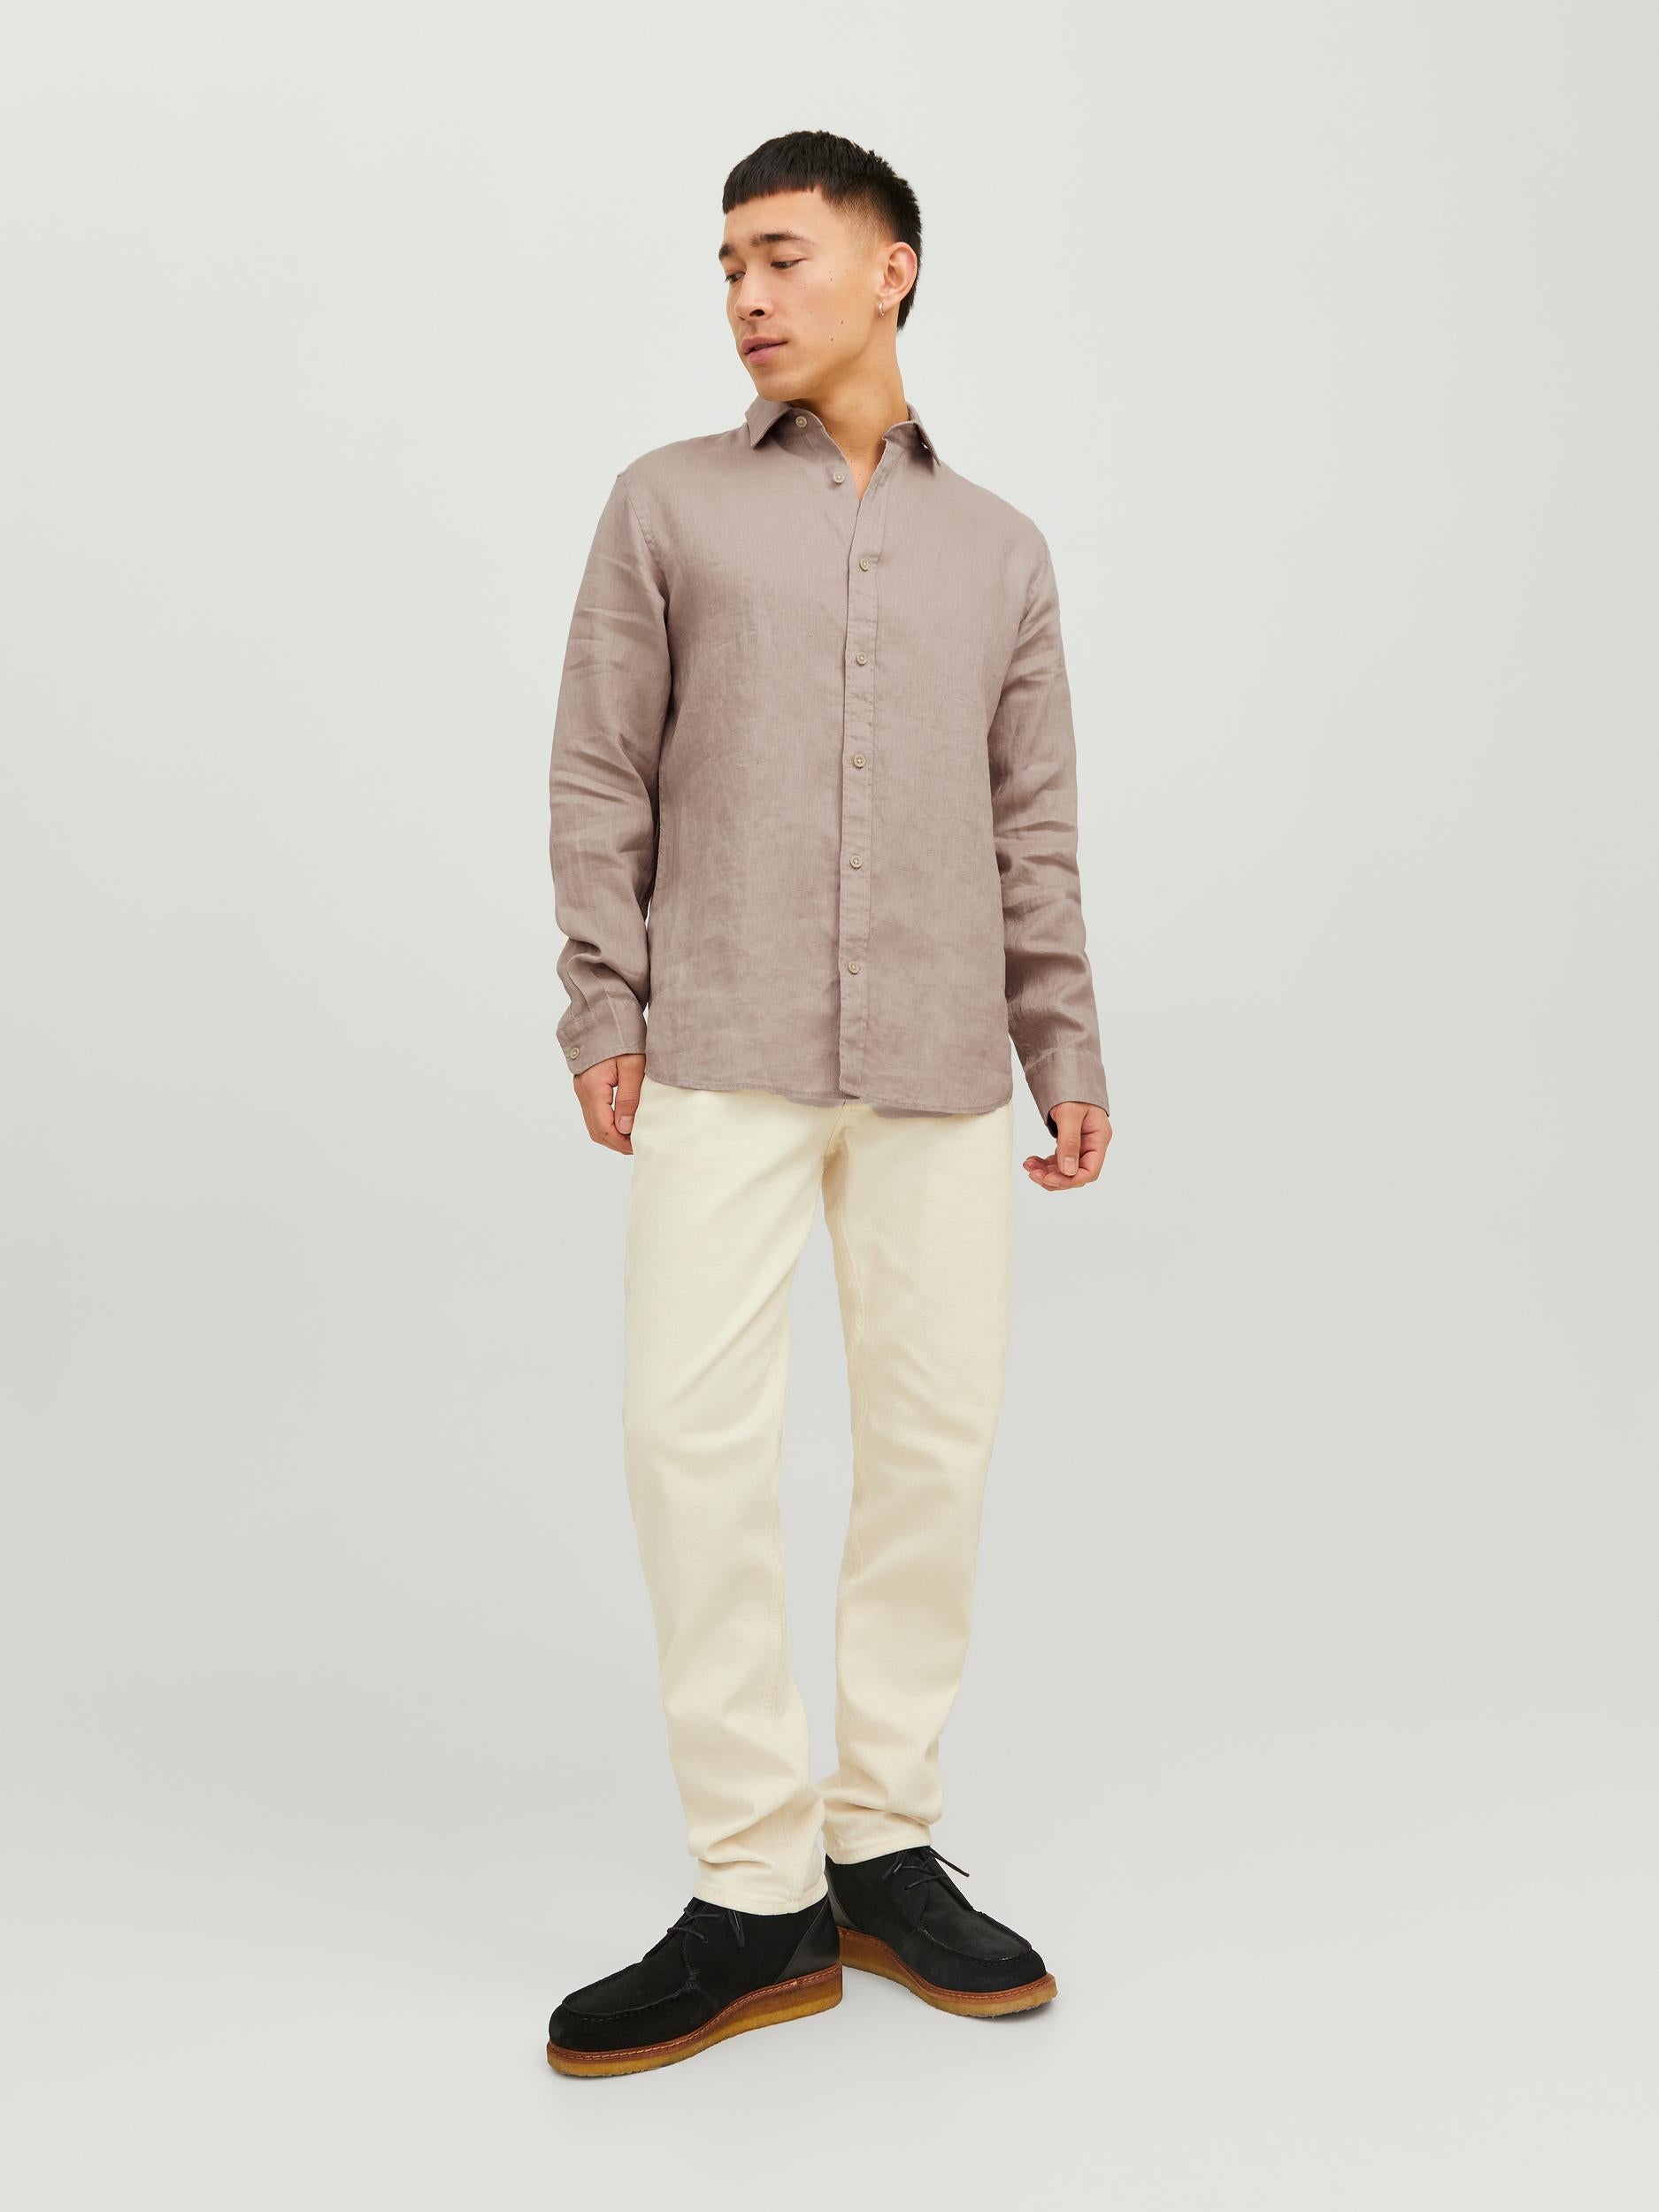 Men's Ordinary Long Sleeve Crockery Linen Shirt-Model Full Front View